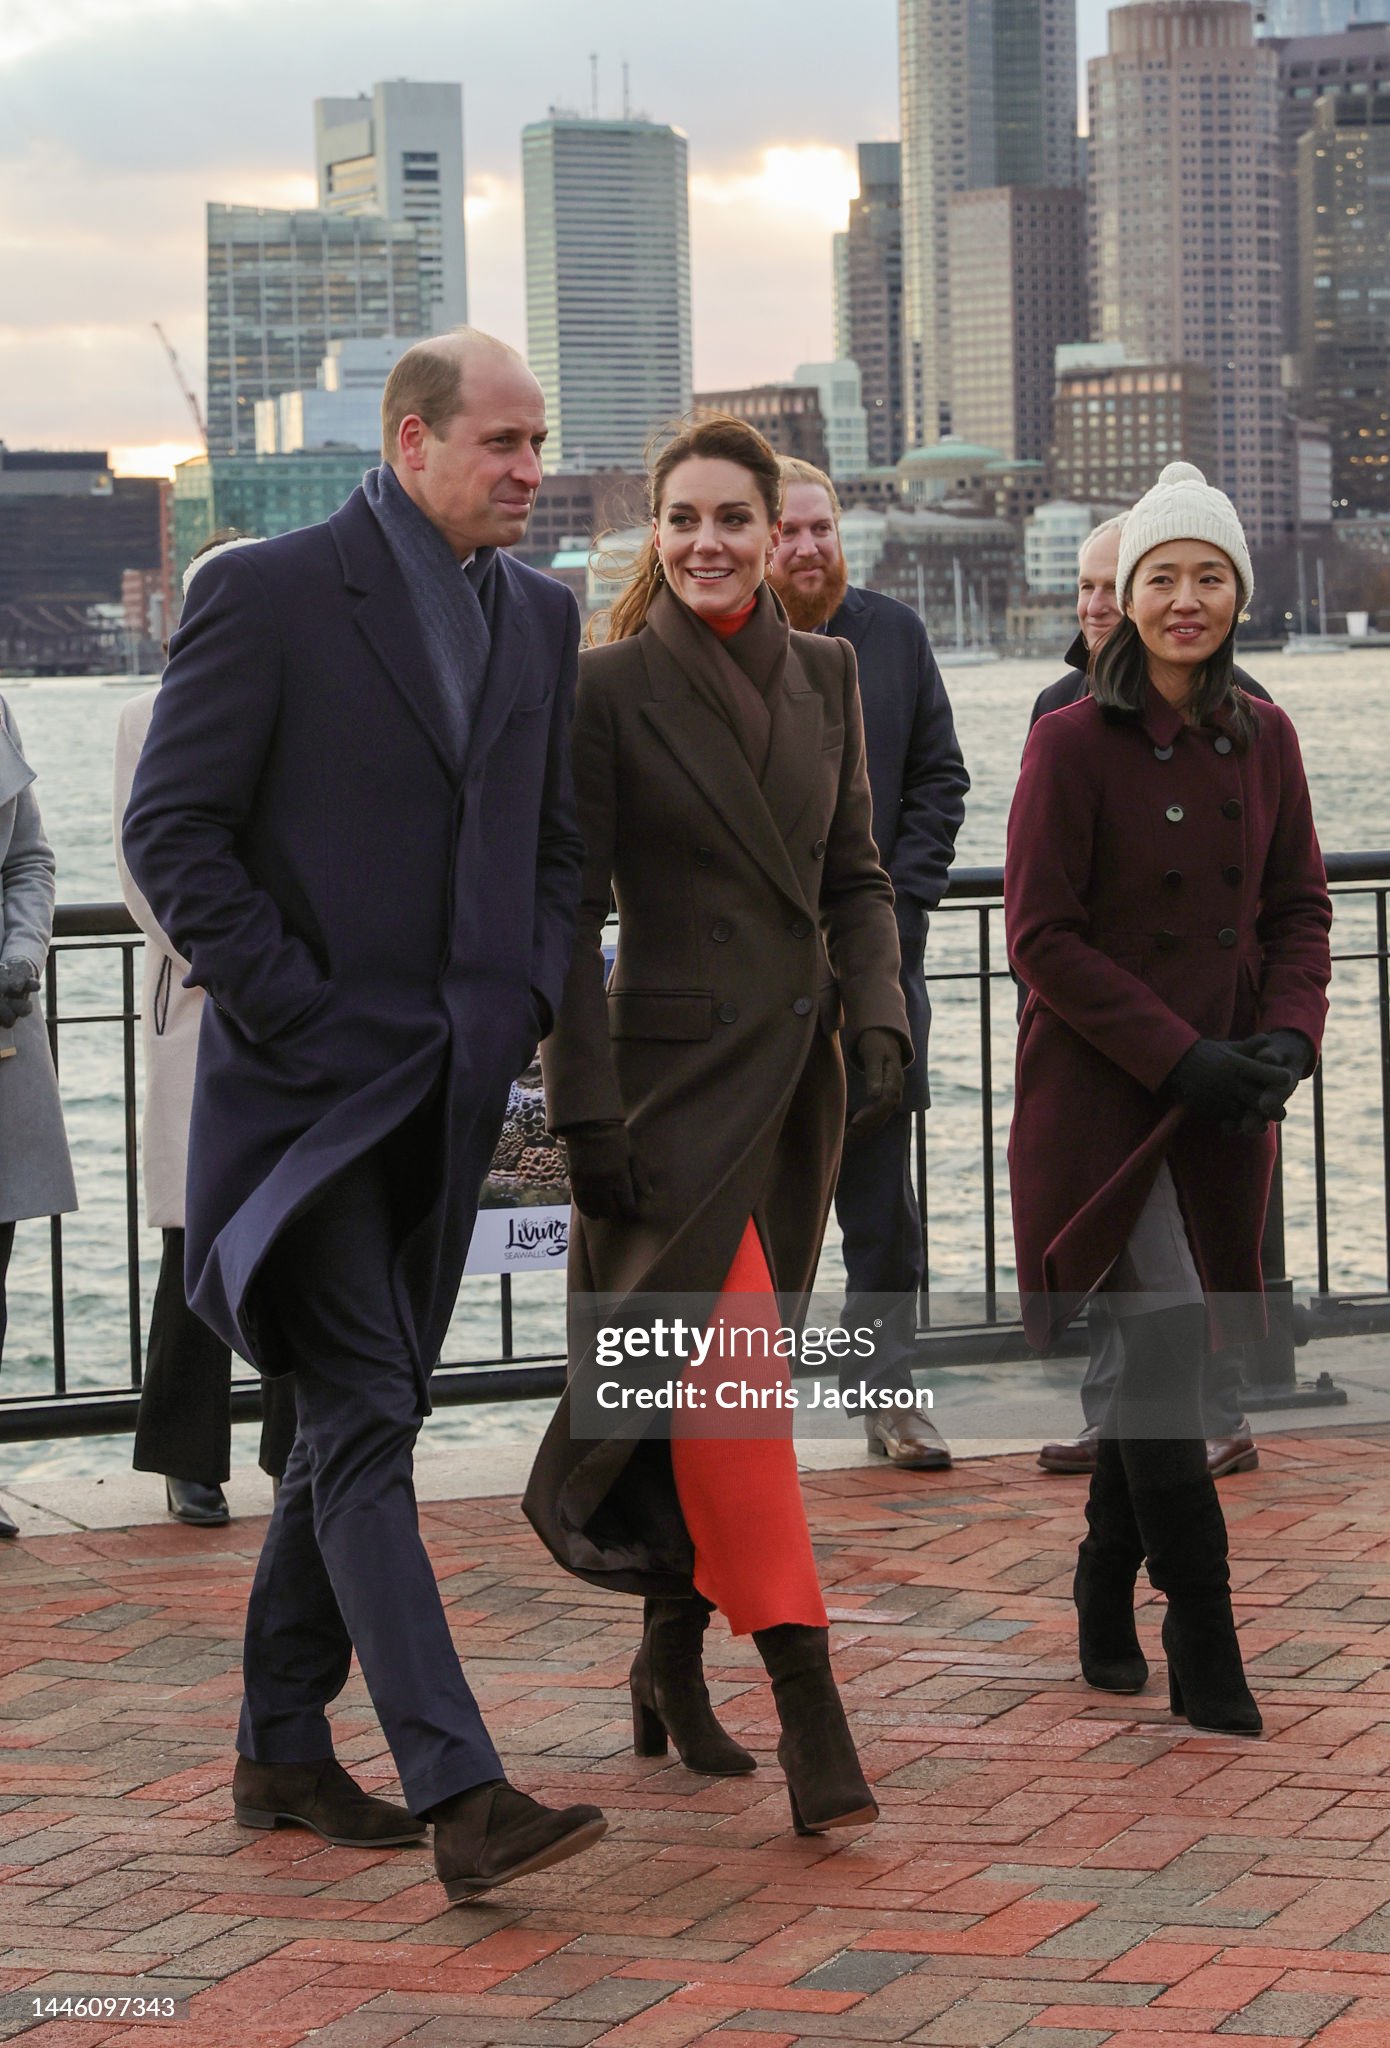 the-prince-and-princess-of-wales-visit-boston-day-2.jpg?s=2048x2048&w=gi&k=20&c=nTECtOu652v3C2QiarJxMp1TABEKgnESwitKlRX3FgA=